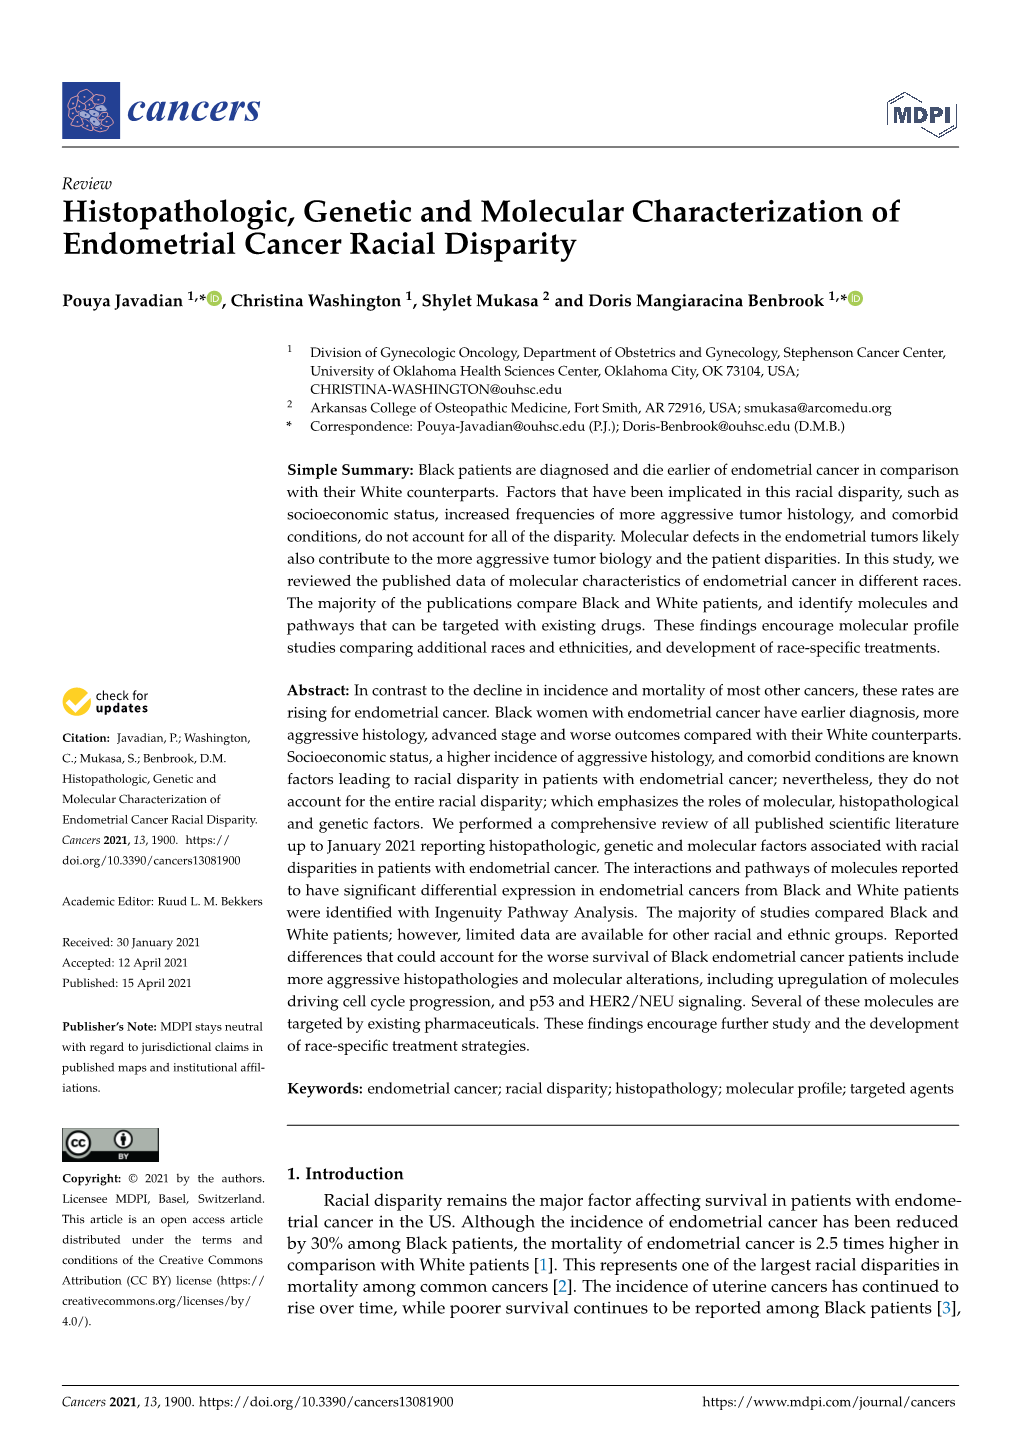 Histopathologic, Genetic and Molecular Characterization of Endometrial Cancer Racial Disparity